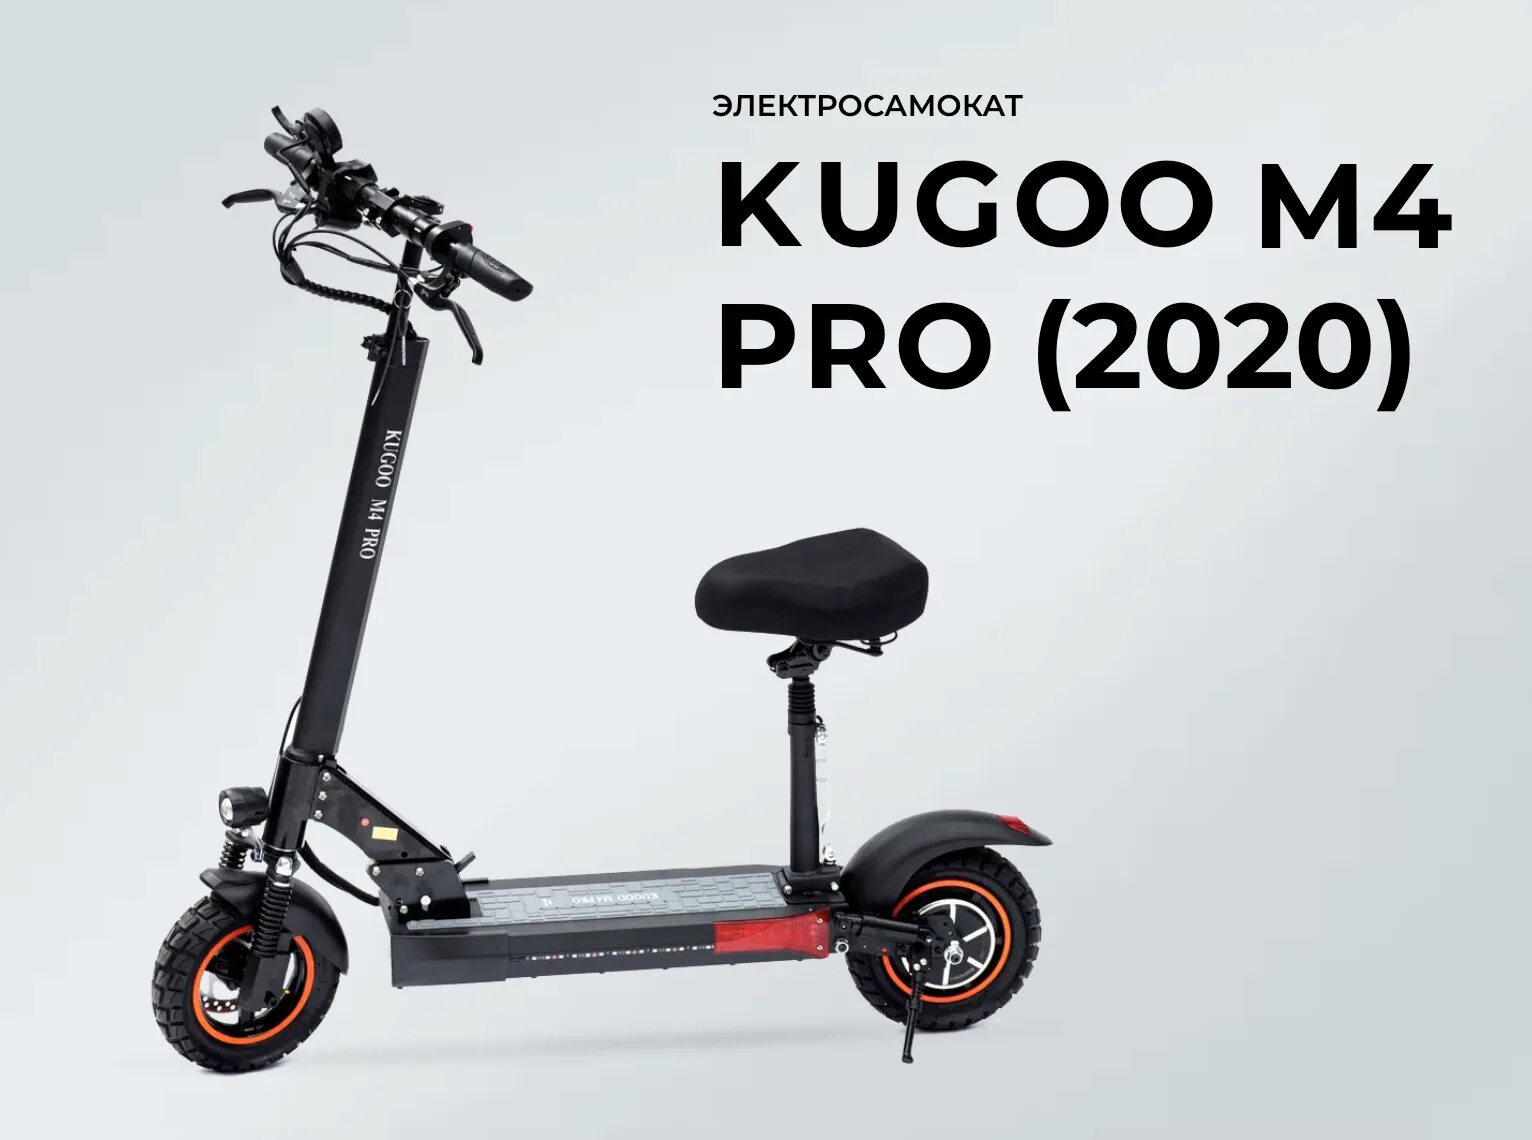 Куго минск. Электросамокат Kugoo м4 Pro. Самокат Kugoo m4. Kugoo m4 Pro 2020 электросамокат. Электросамокат Kugoo m4 Pro 18.